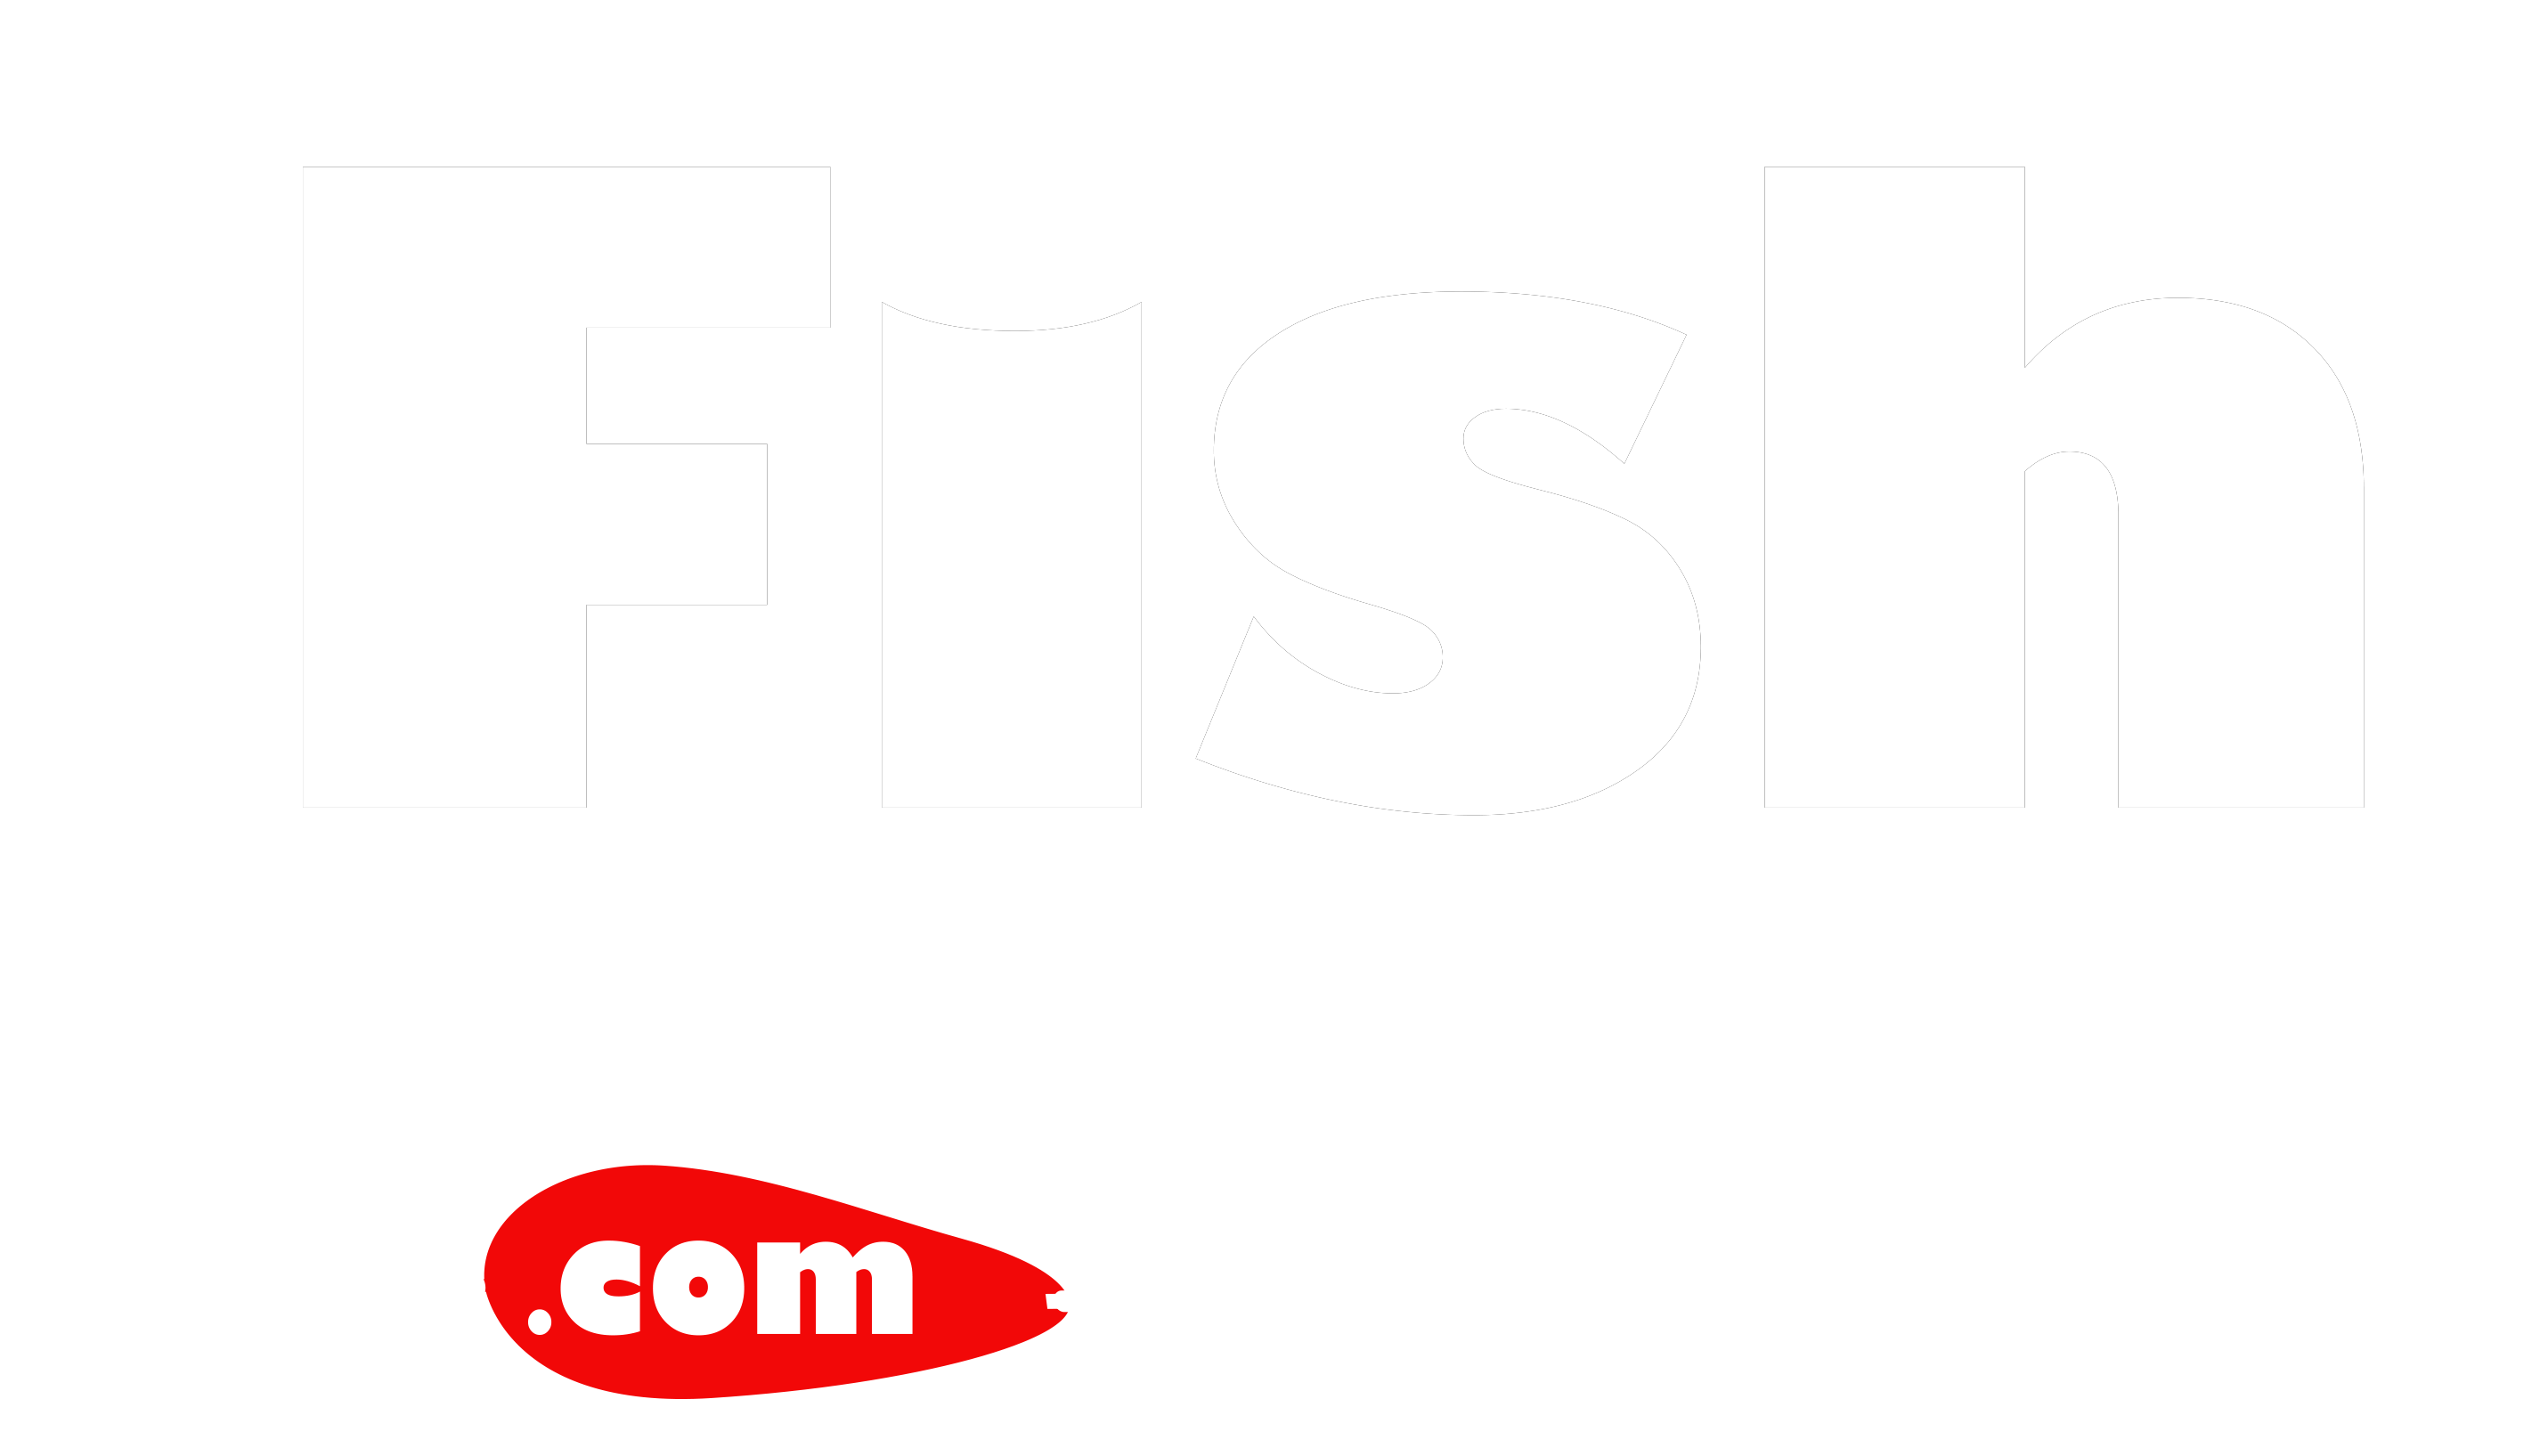 FishFodder.com